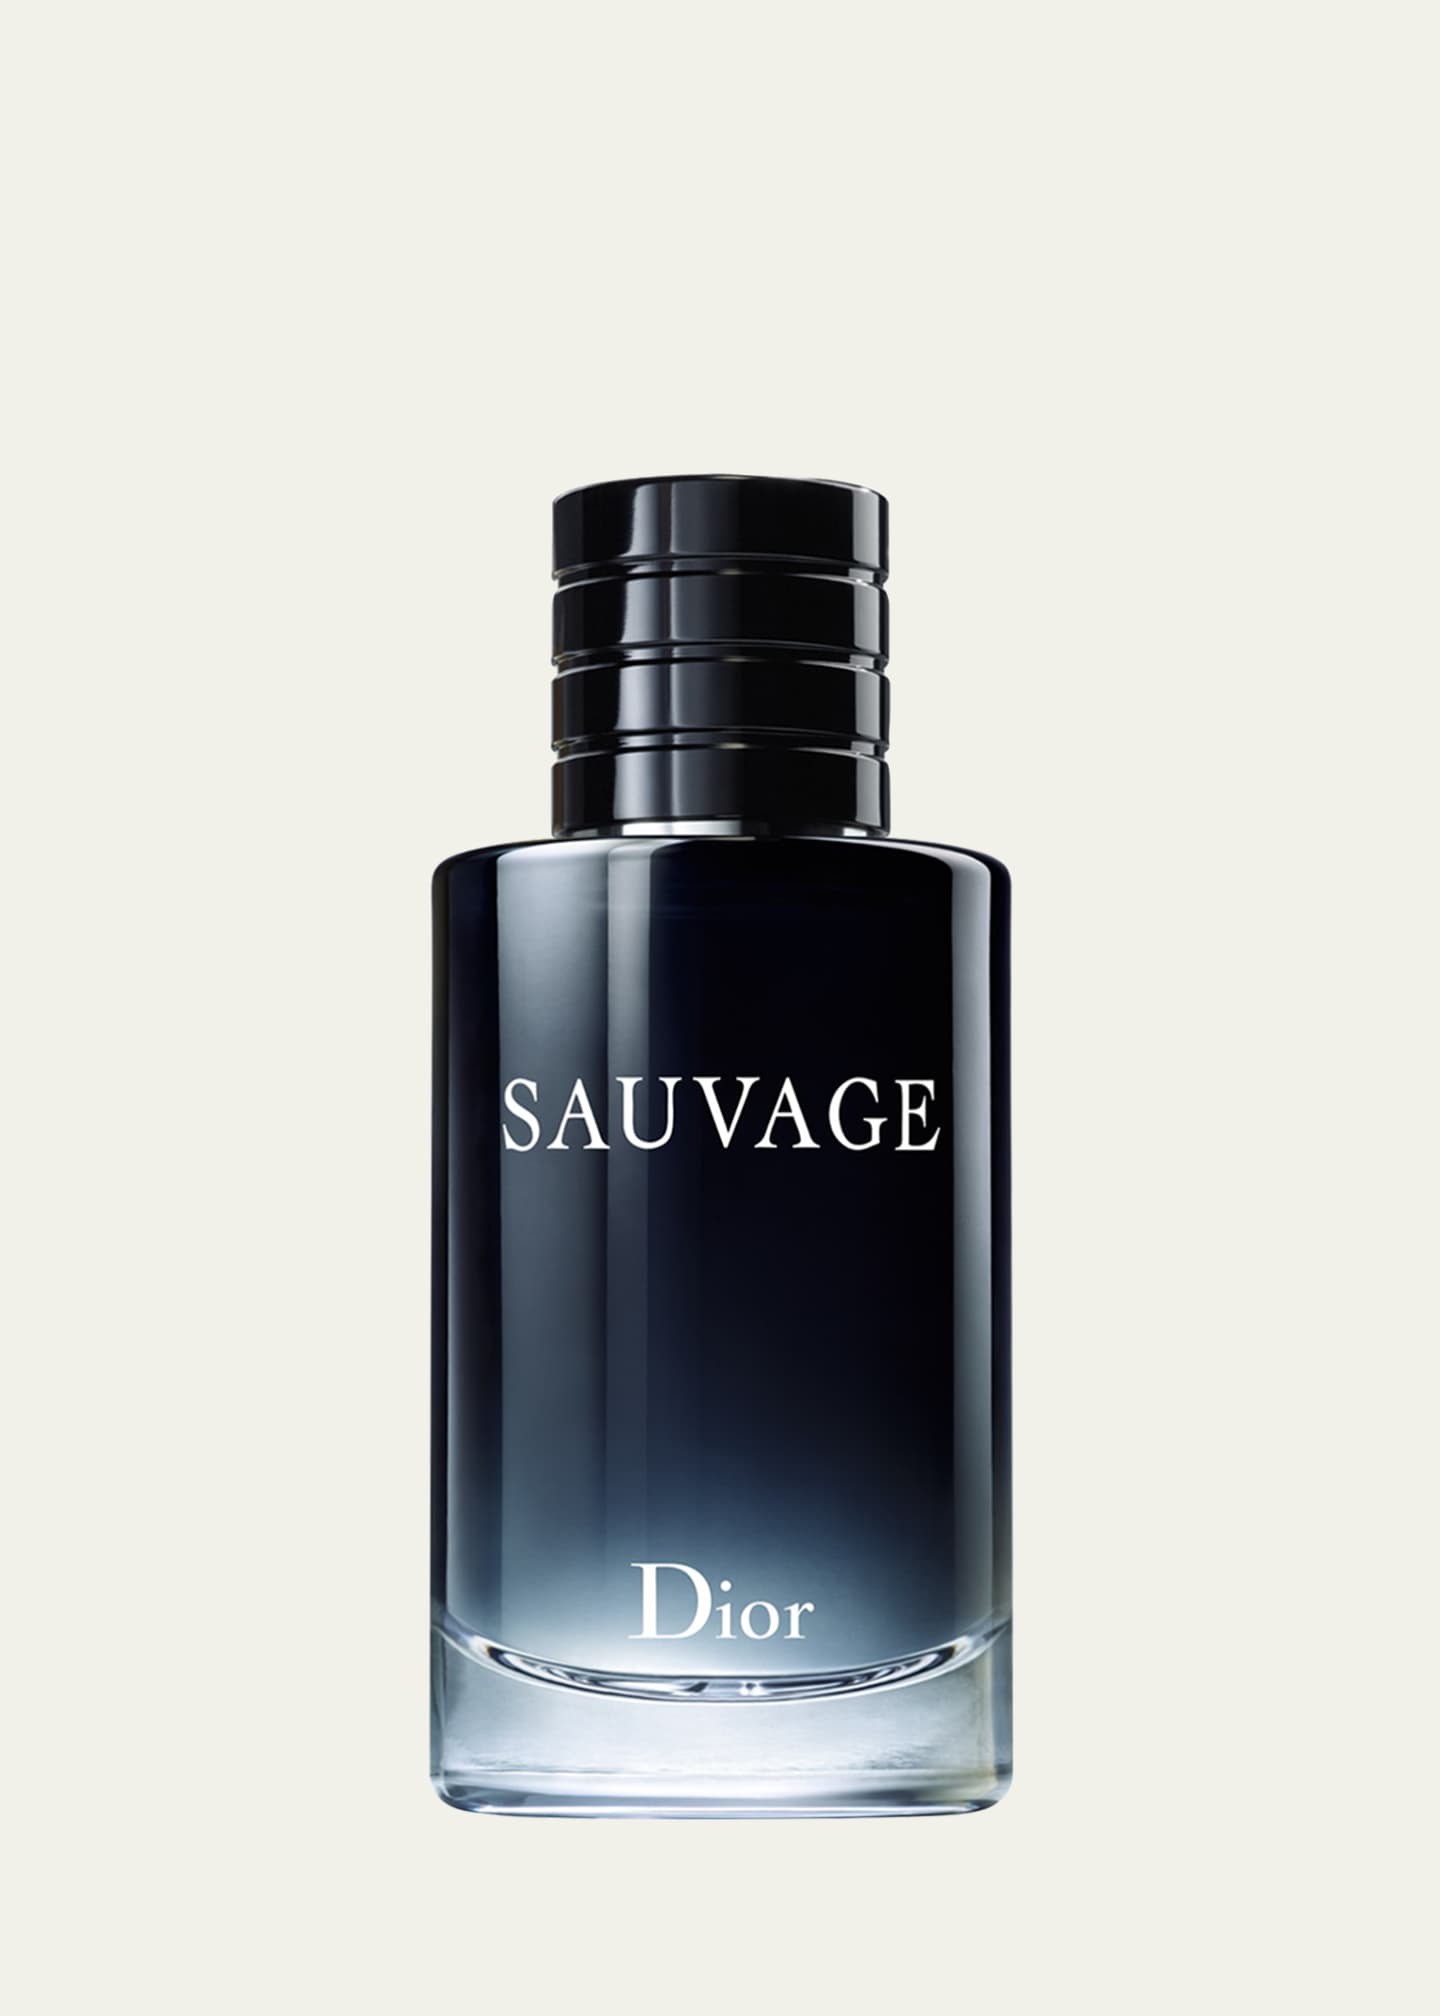 Dior Sauvage Eau de Toilette, 2 oz. - Bergdorf Goodman